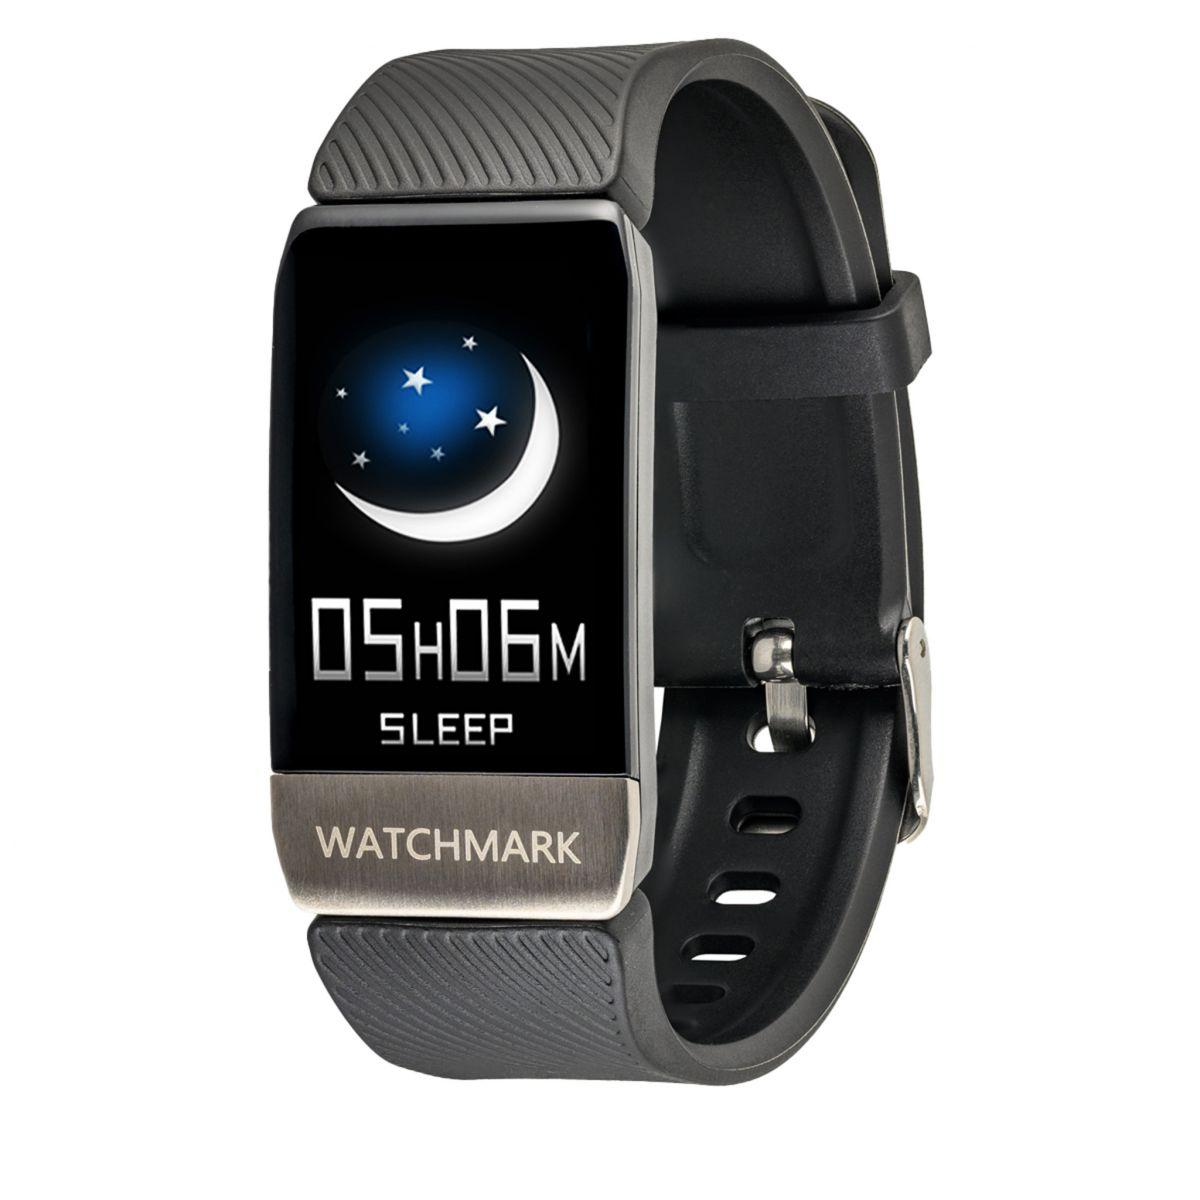 schwarz Metall/Kunststoff Silizium, Smartwatch WATCHMARK WT1 Schwarz